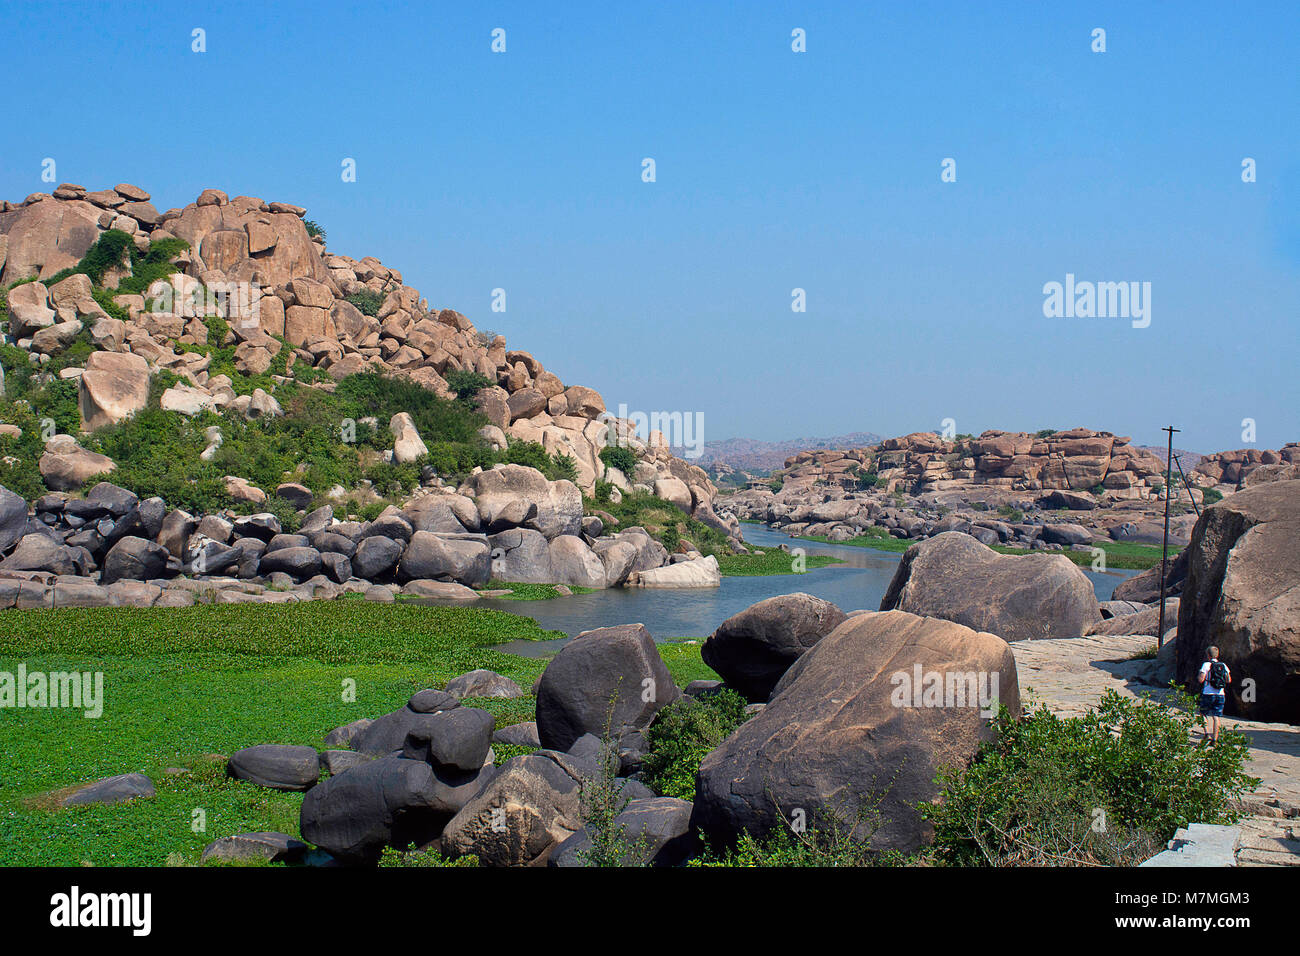 Tungabhadra river and rocky terrain. Hampi, Karnataka, India Stock Photo